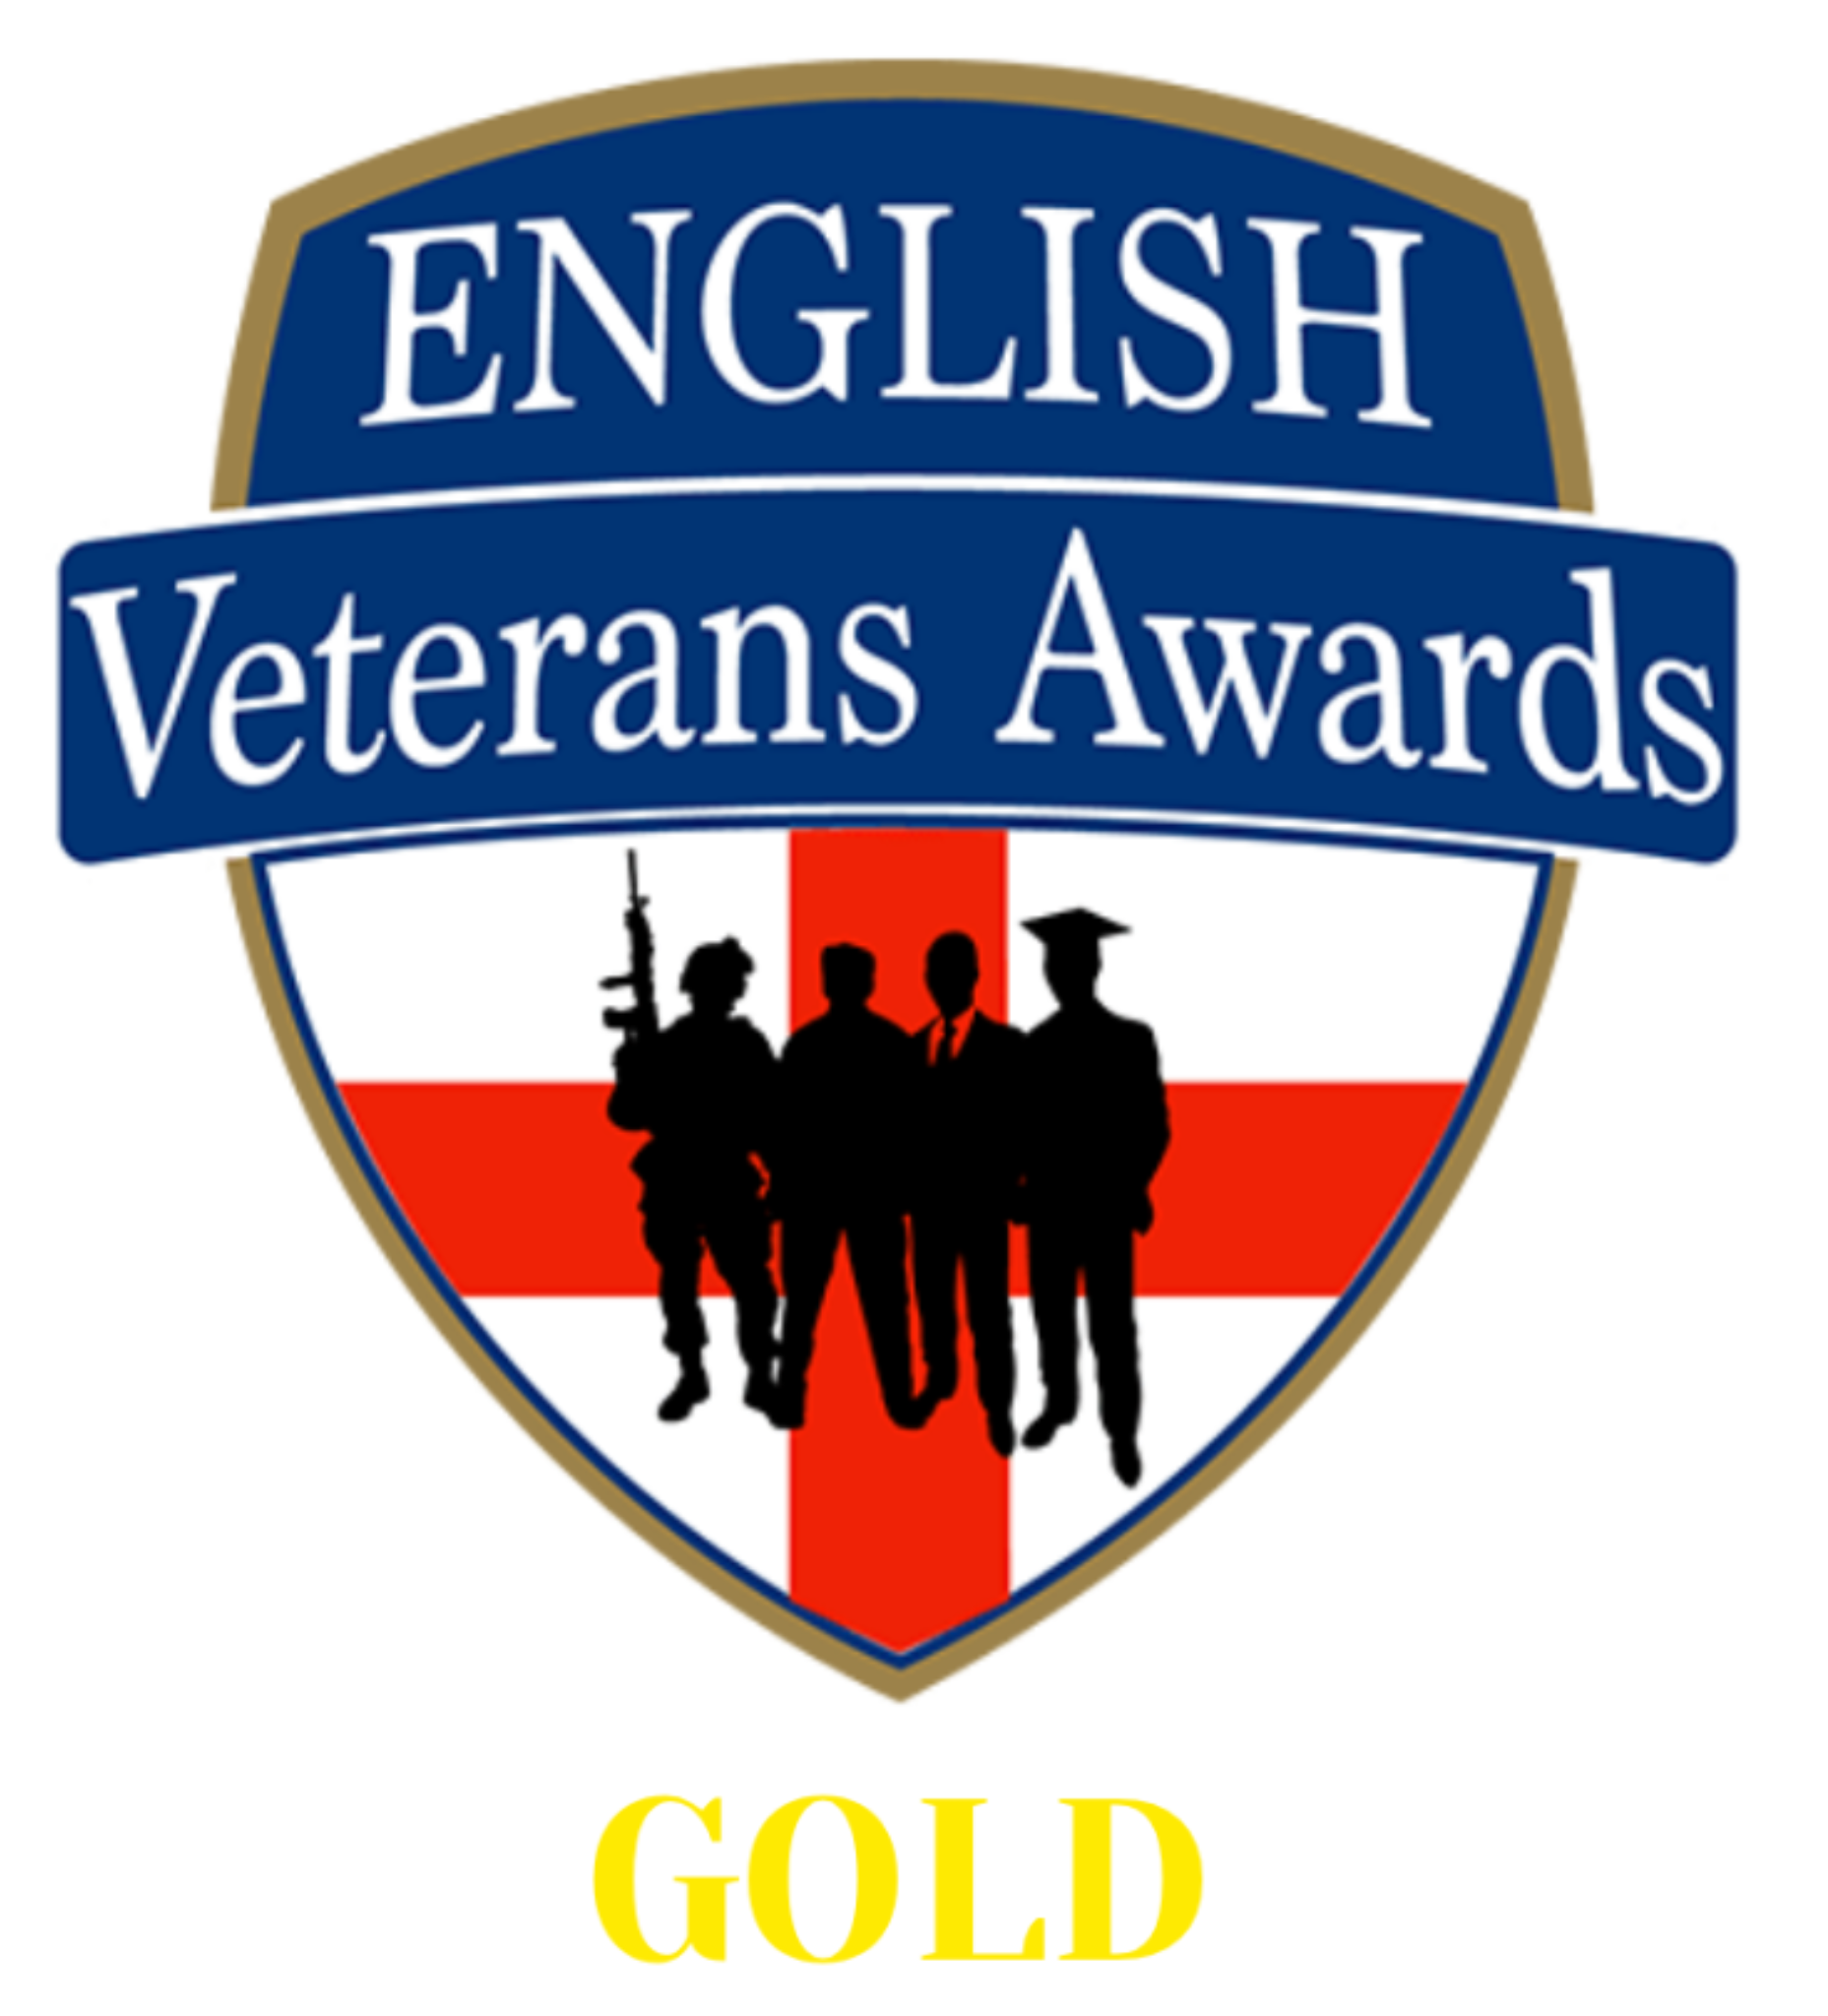 English Veterans Awards 2021 - Employer of the Year (Gold) logo